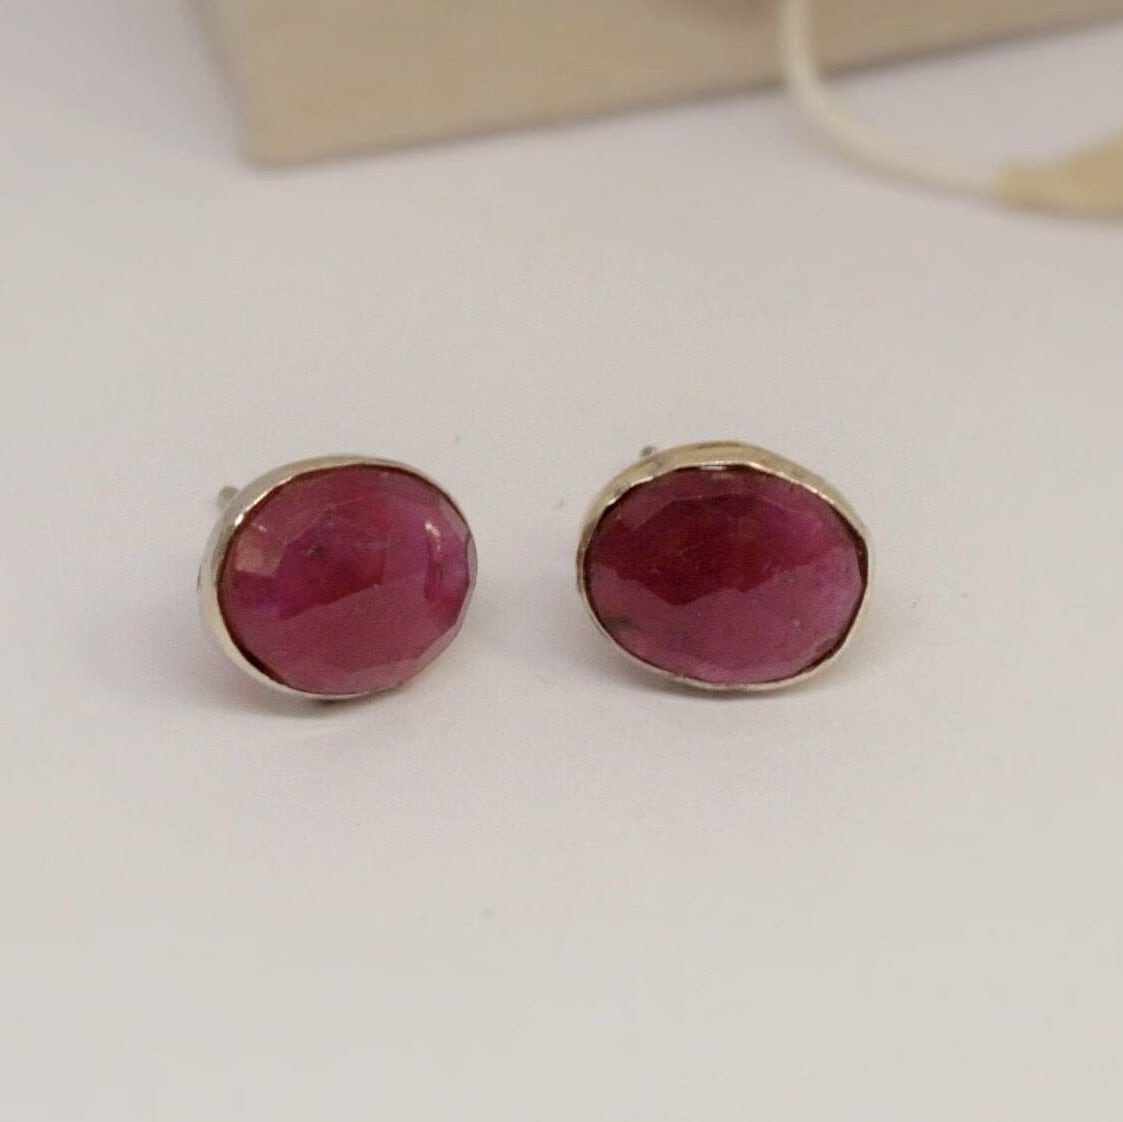 Ruby Silver Stud Earrings, Sterling Silver Red Earrings, Gift For Her, Handmade Minimalist Gemstone Earrings, July Birthstone Jewelry